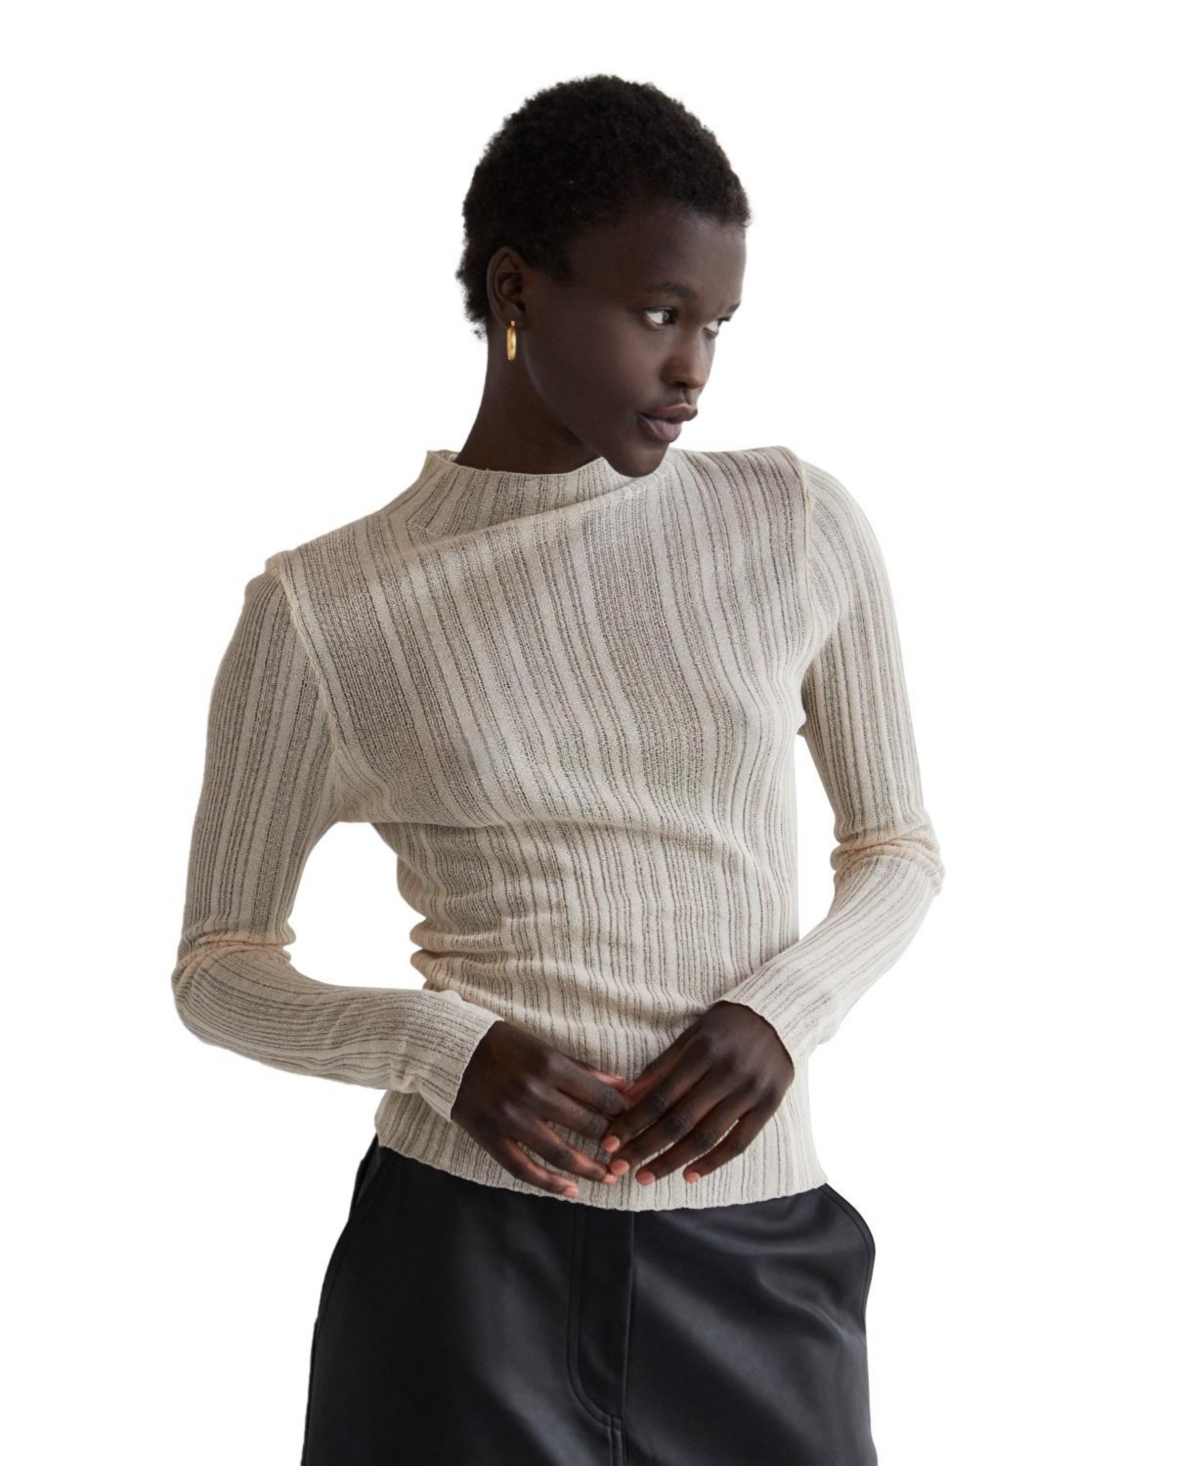 Women's Dane Mock Neck Sheer Knit Sweater Top - Natural + bone